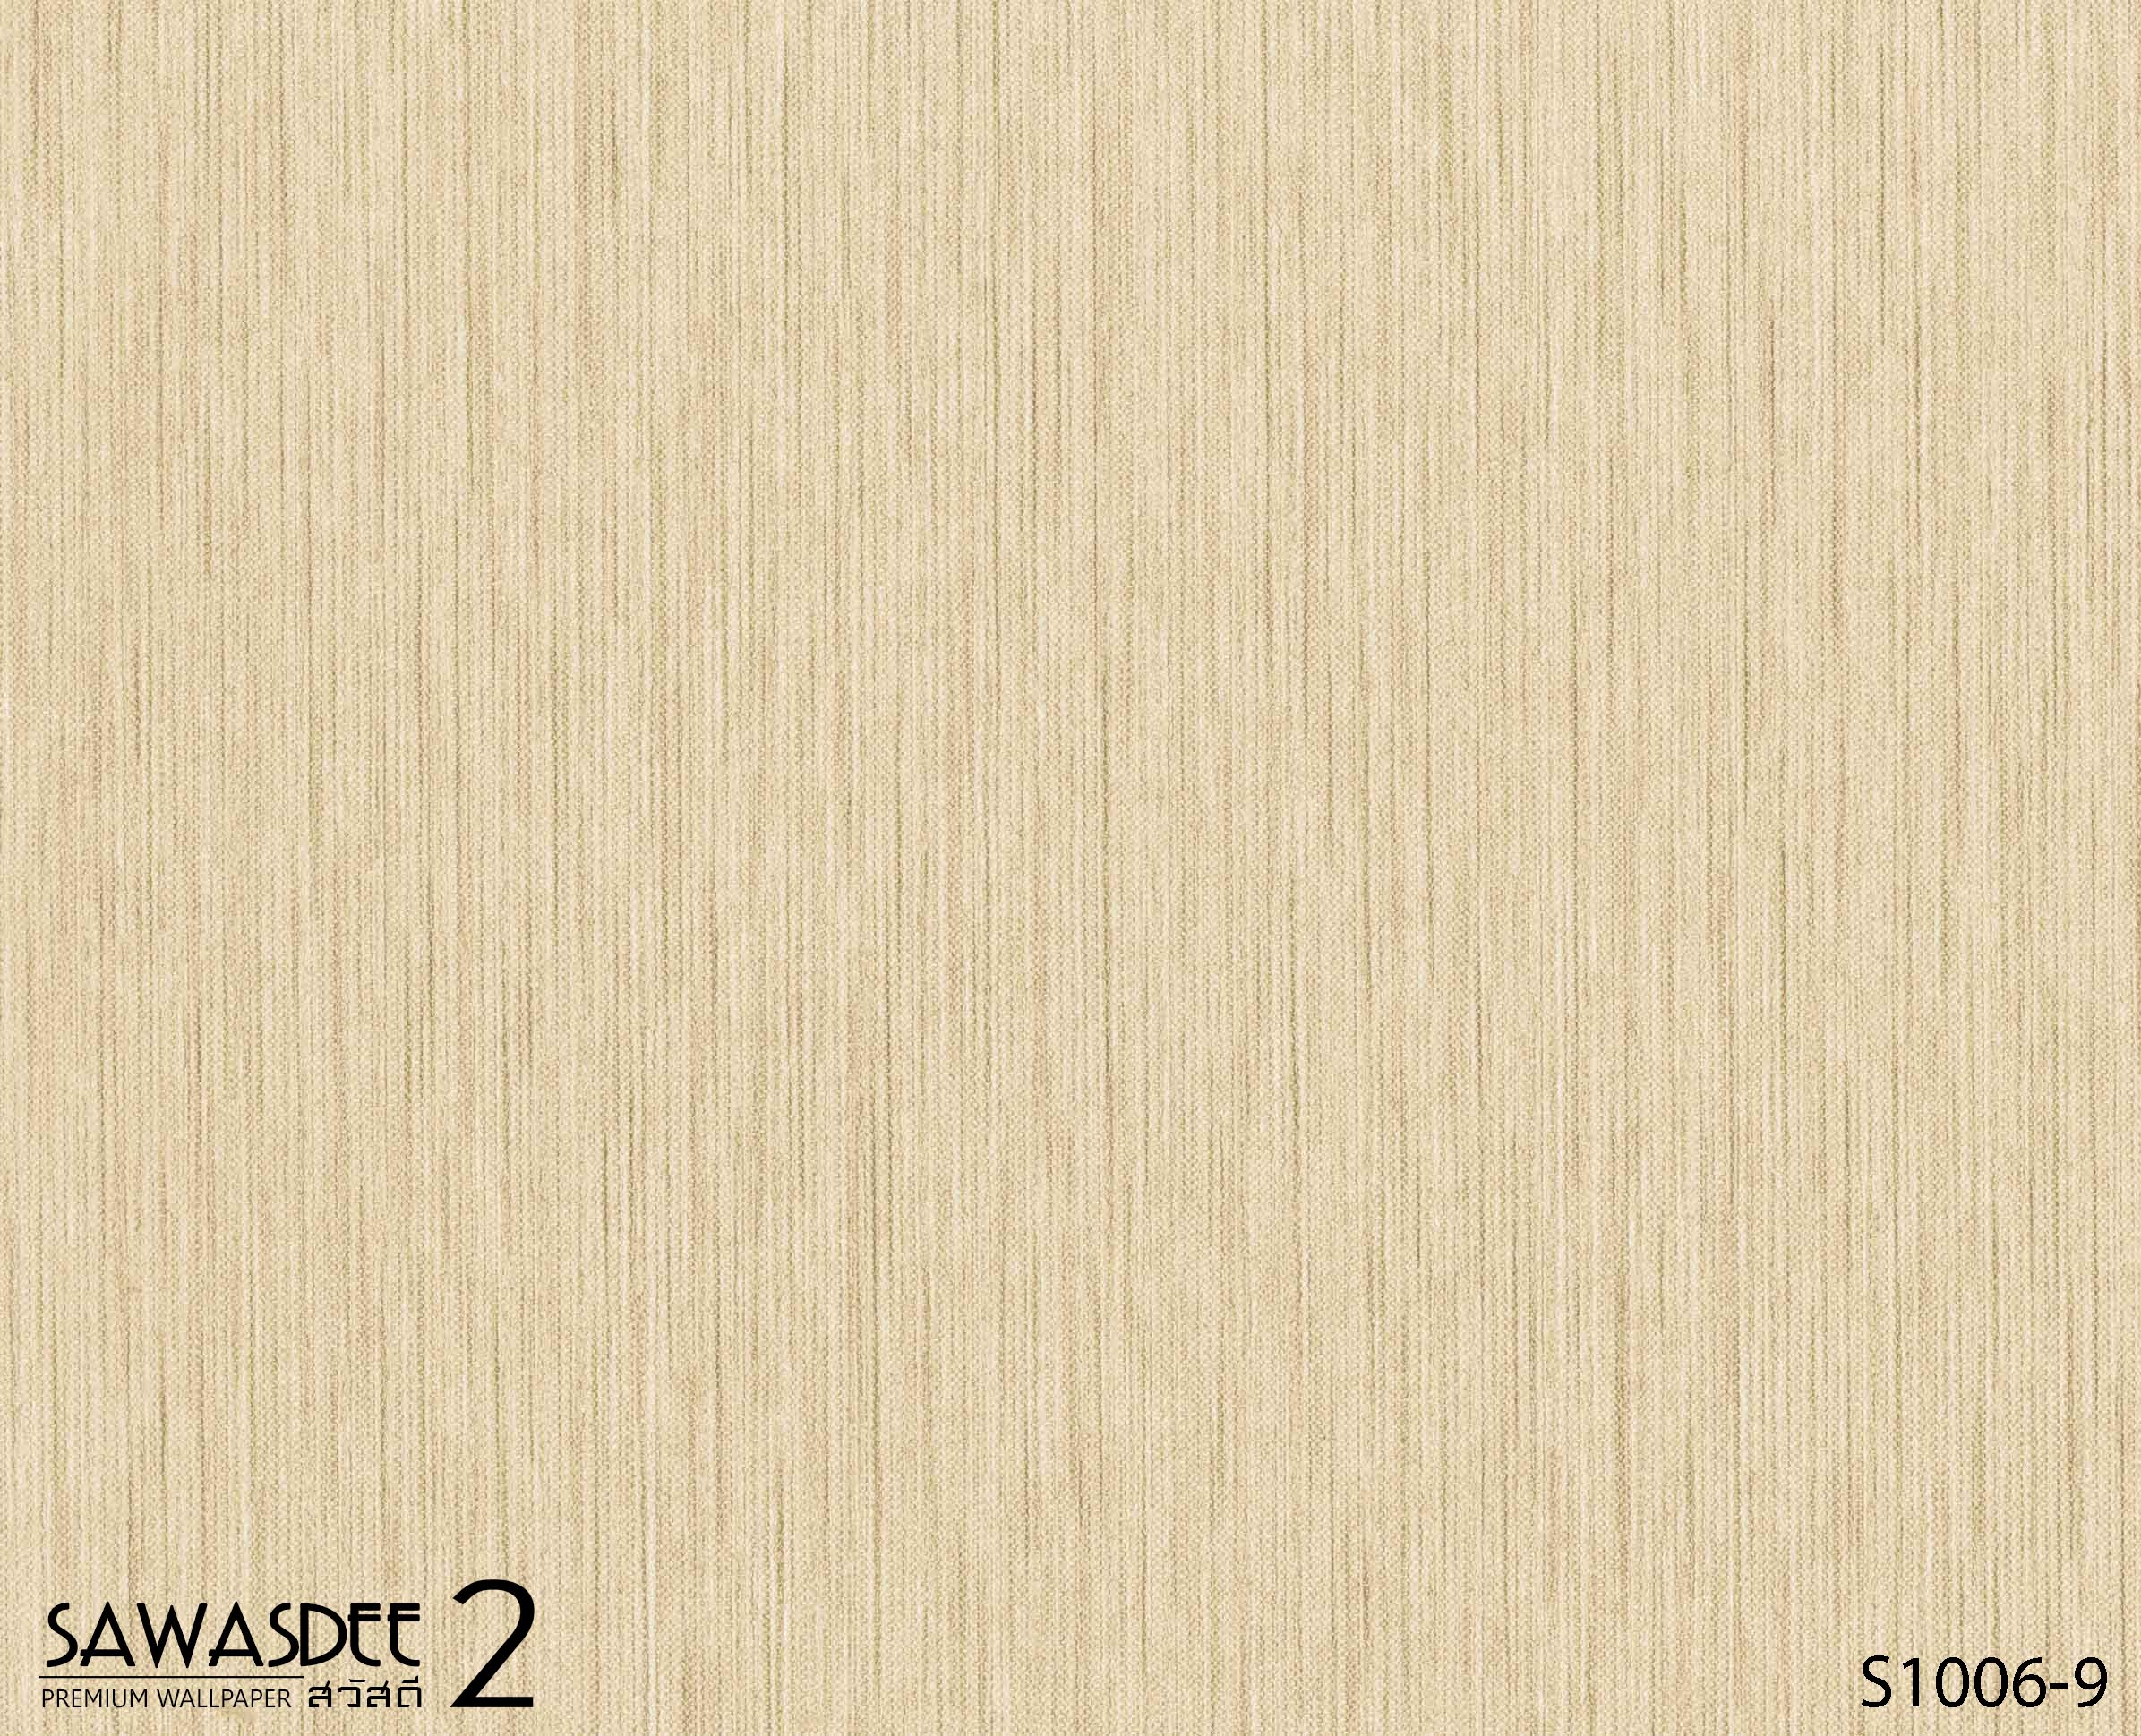 Wallpaper (SAWASDEE 2) S1006-9